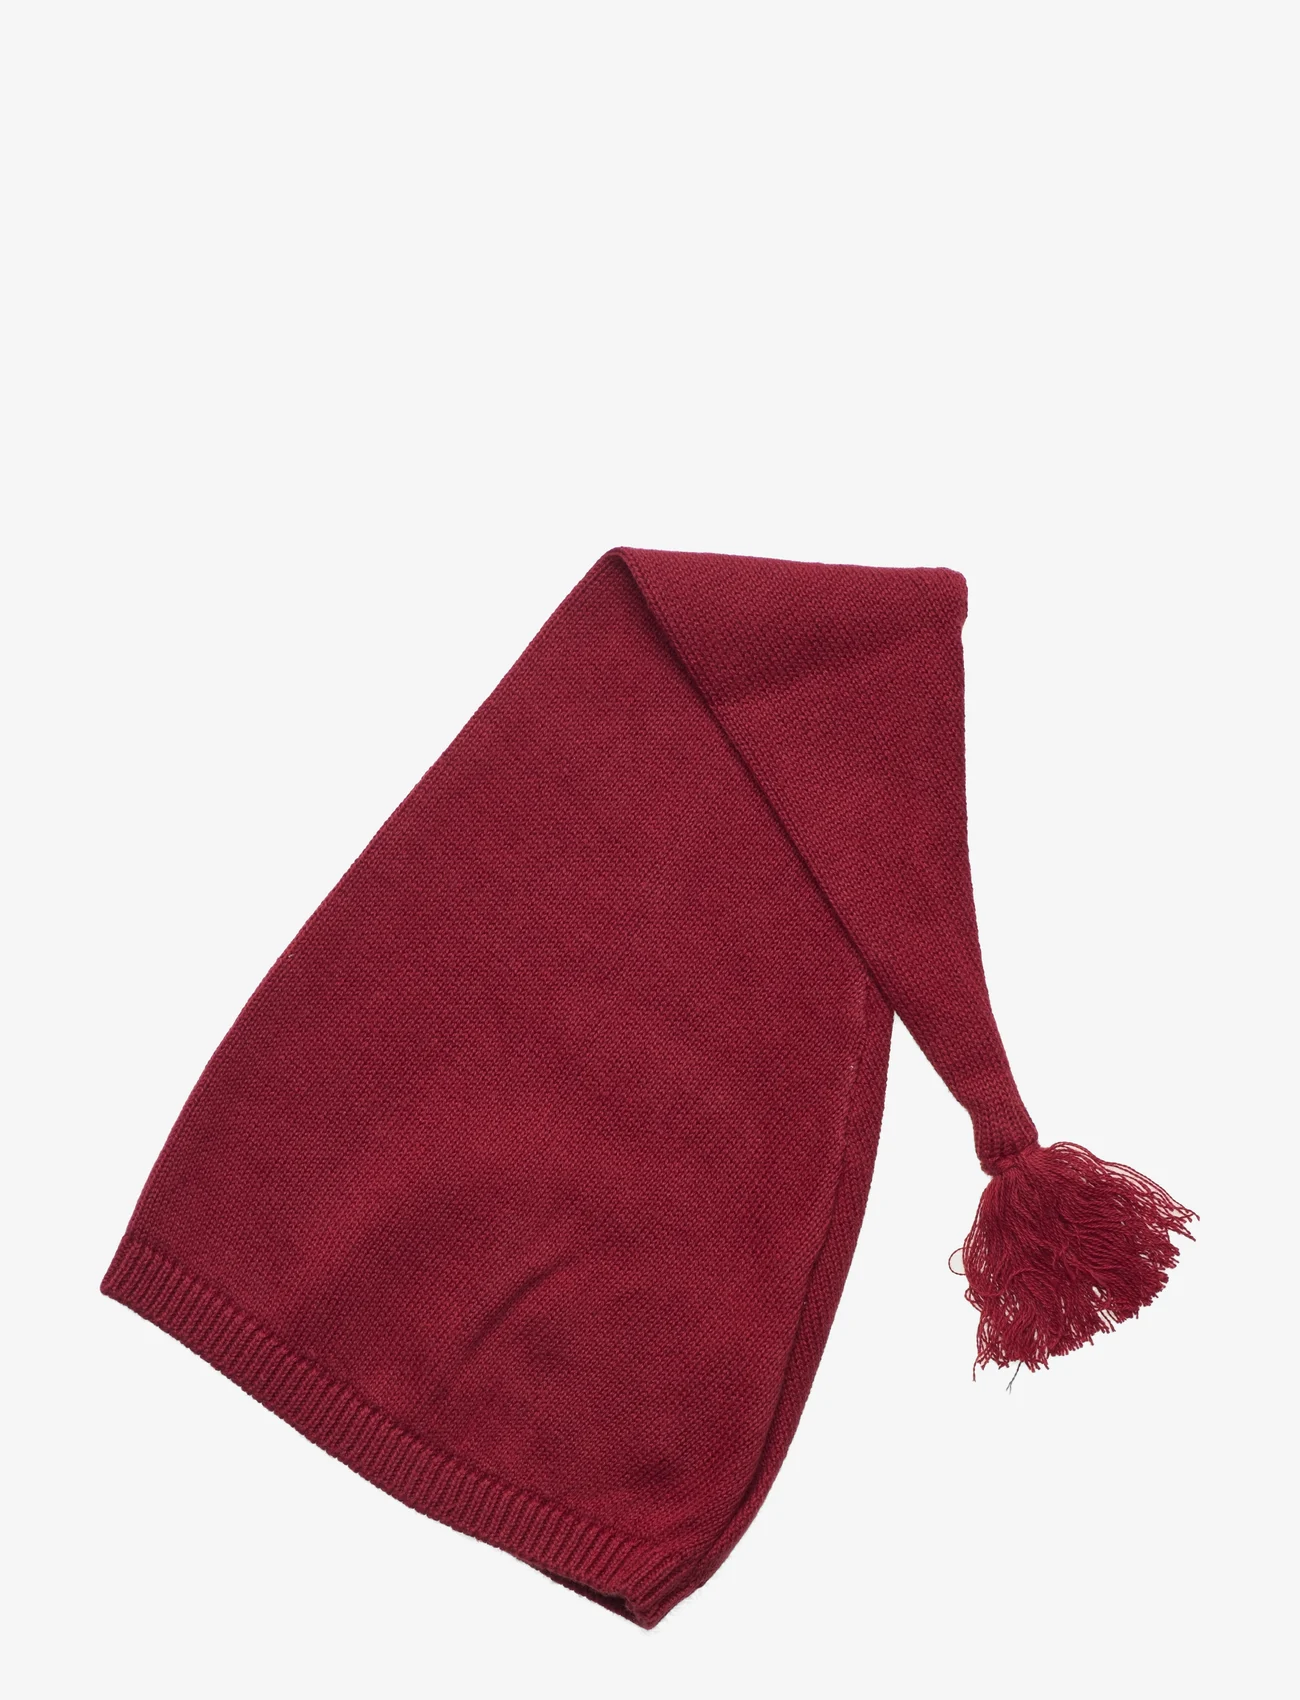 Fixoni - Pixie Hat Knit - costume accessories - rosewood - 1